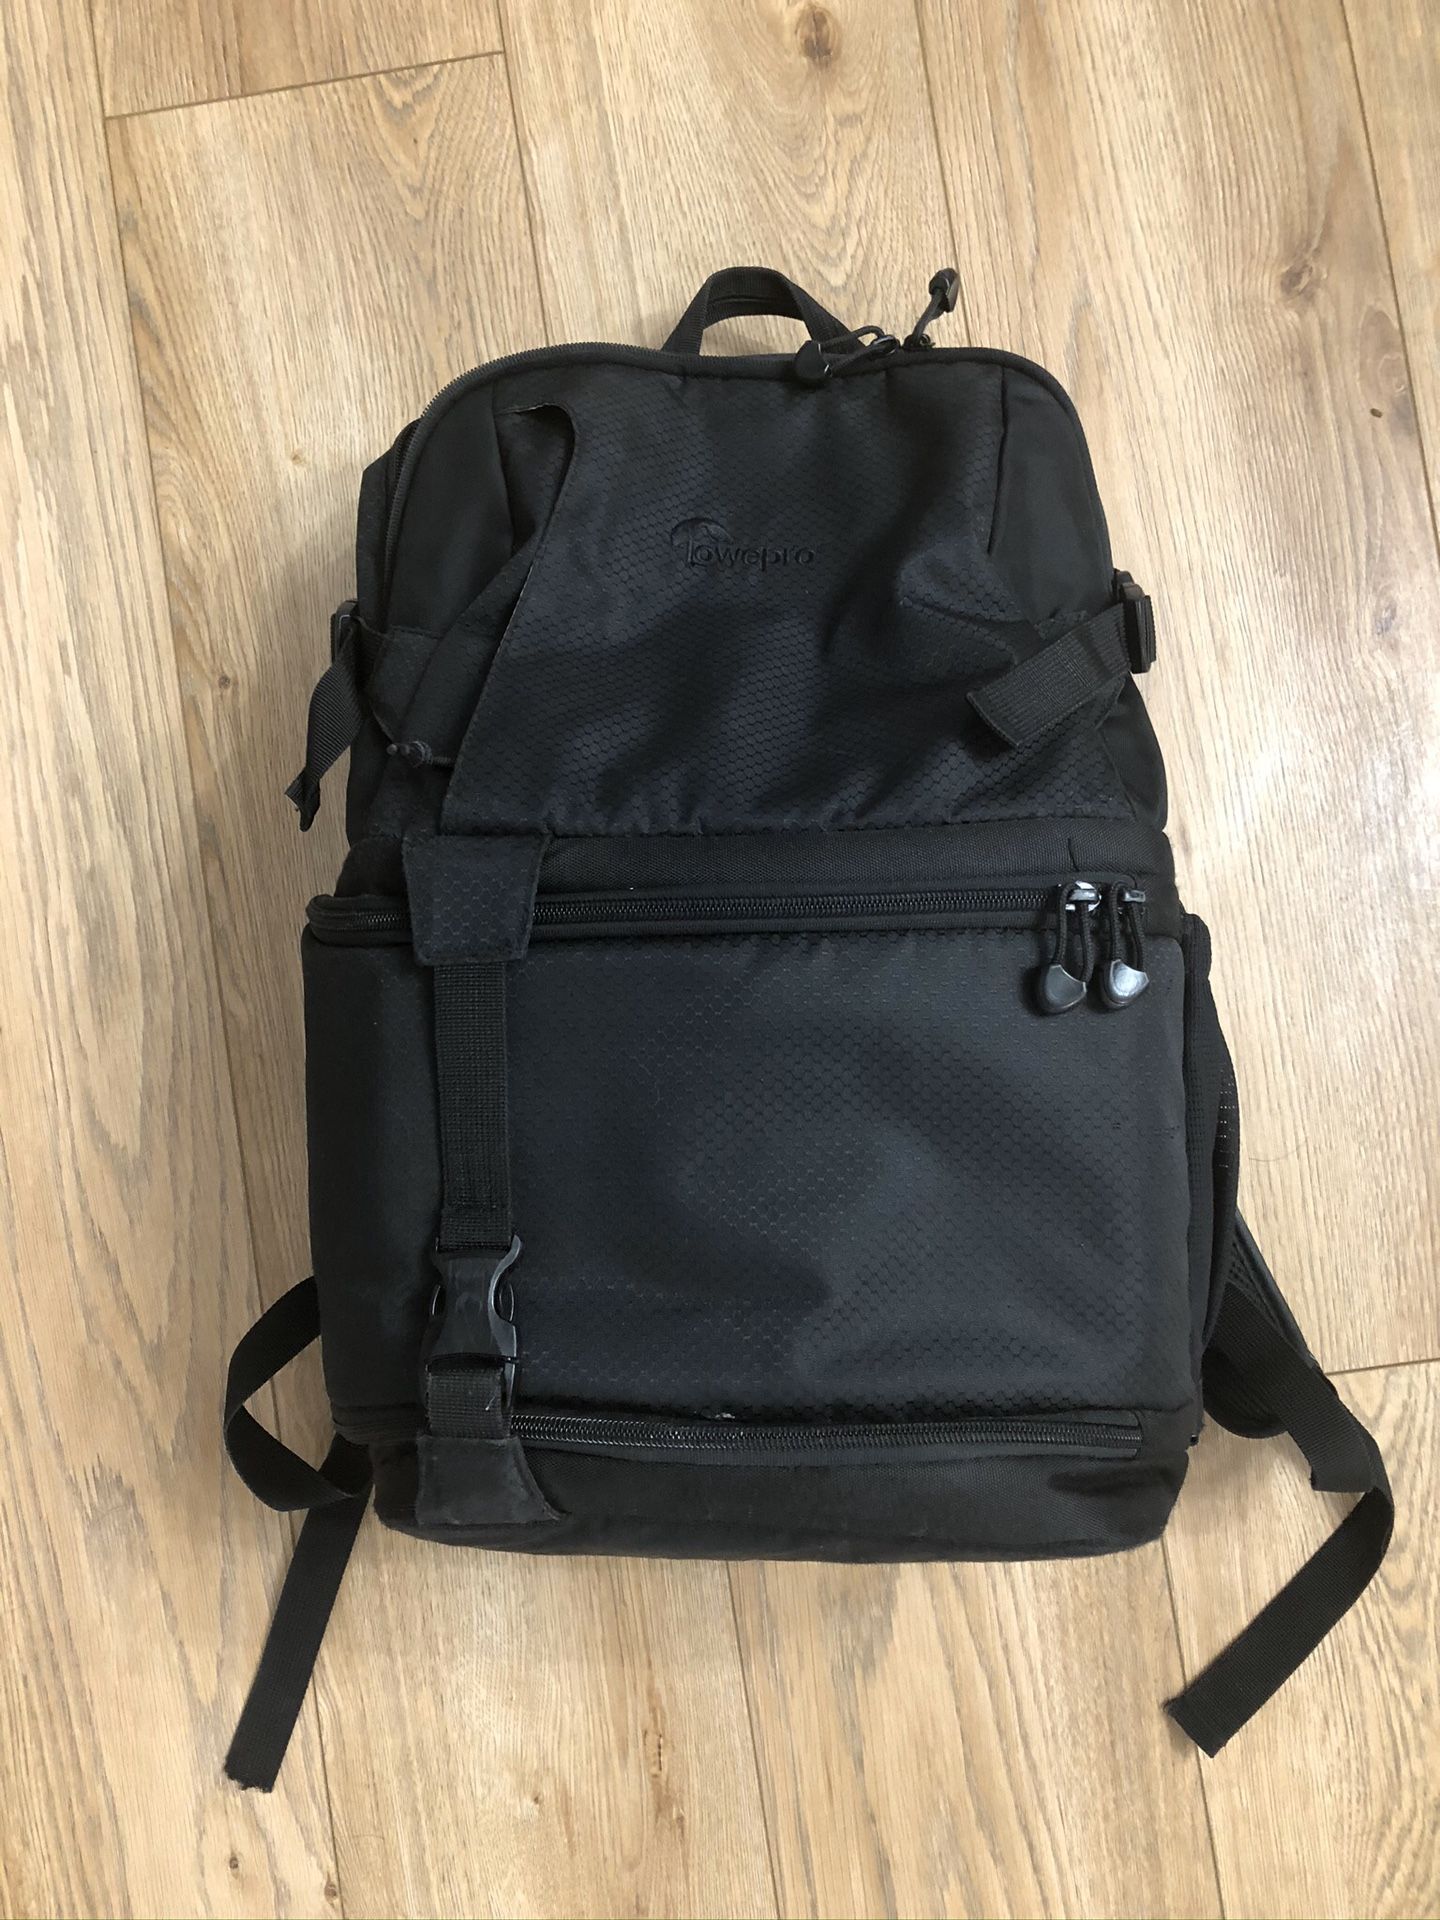 Camera Backpack Bag (Lowepro DSLR video pack 250 AW)